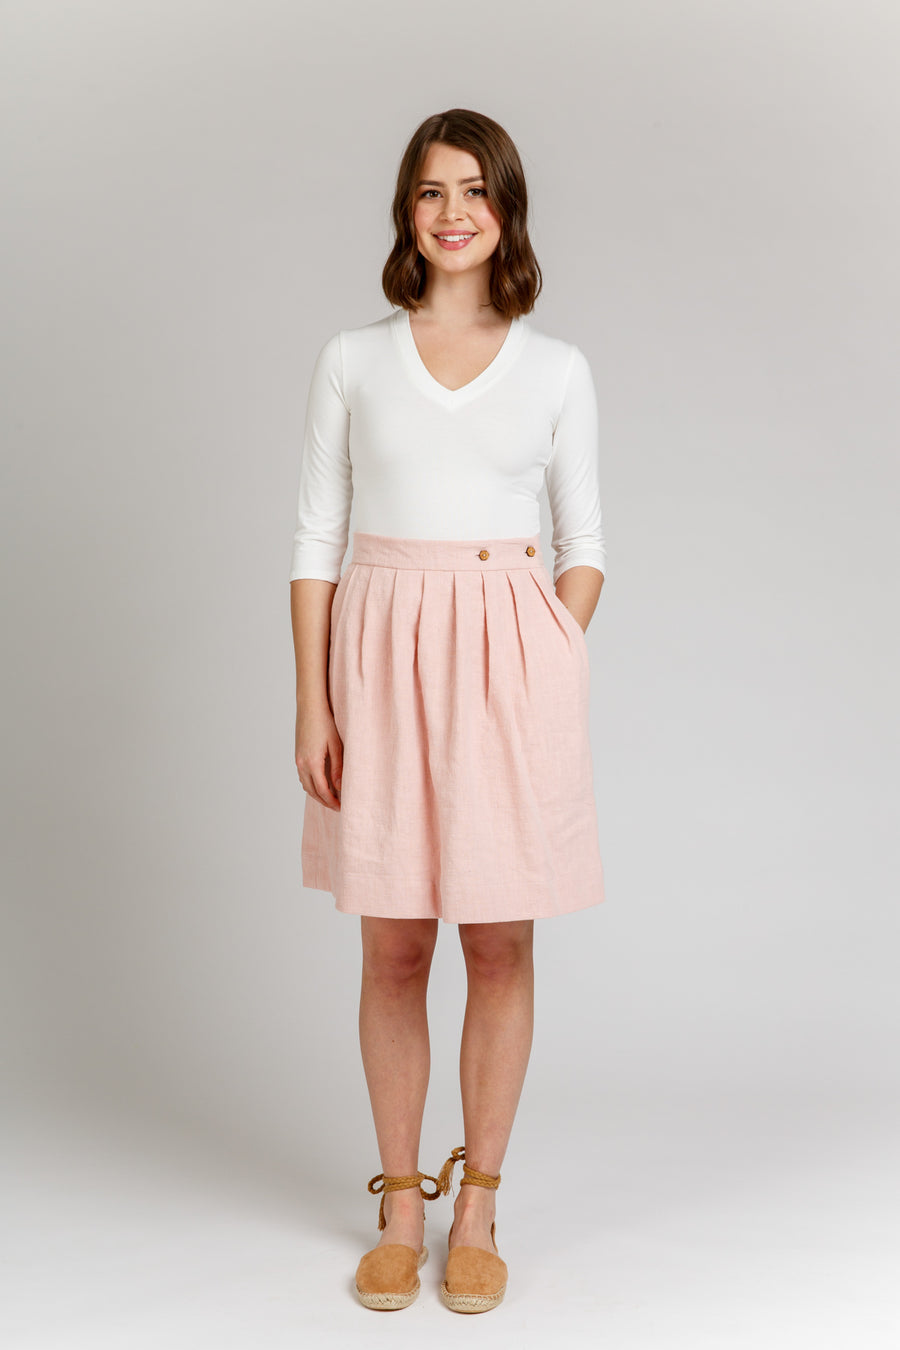 Megan Nielsen - Wattle Skirt